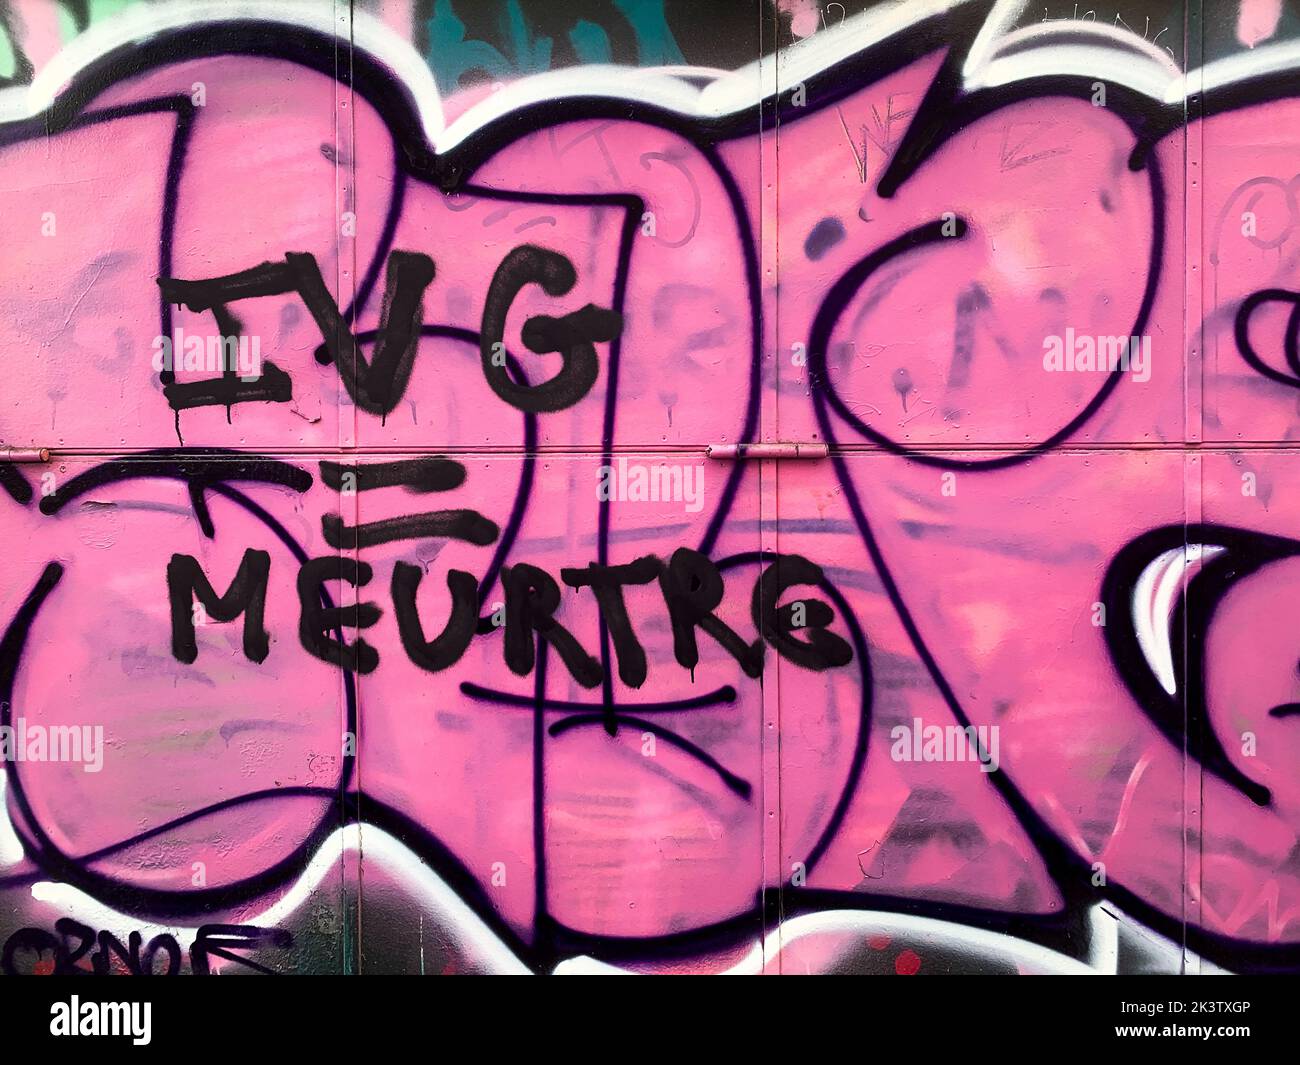 Anti-IVG graffiti, Lyon, France Stock Photo